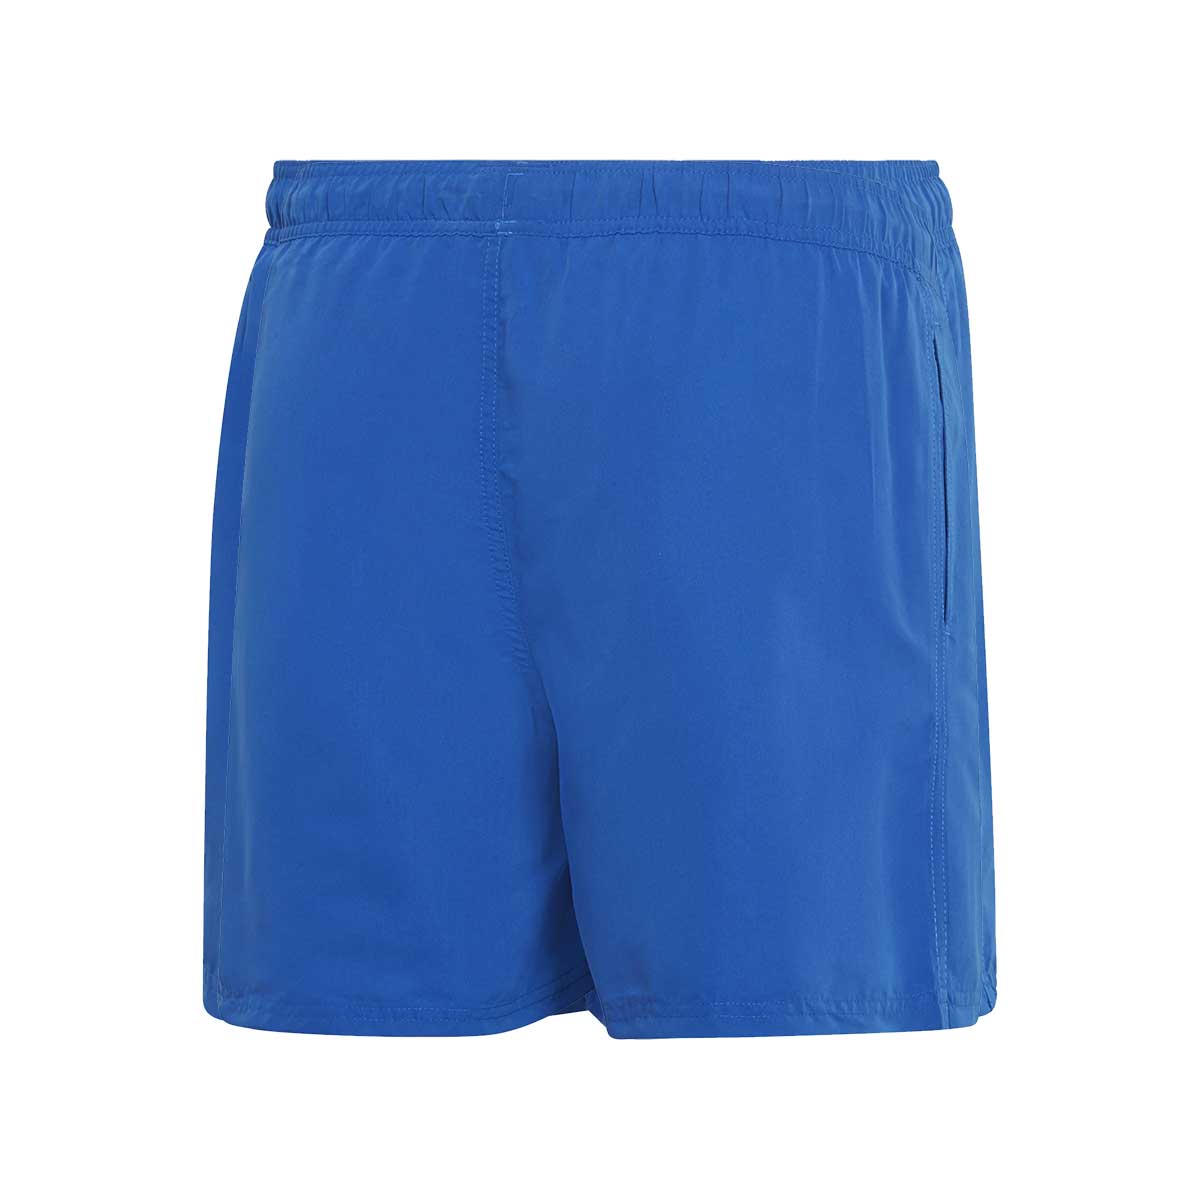 Swim Woven Shorts Reebok Swimwear Yale Mens | eBay